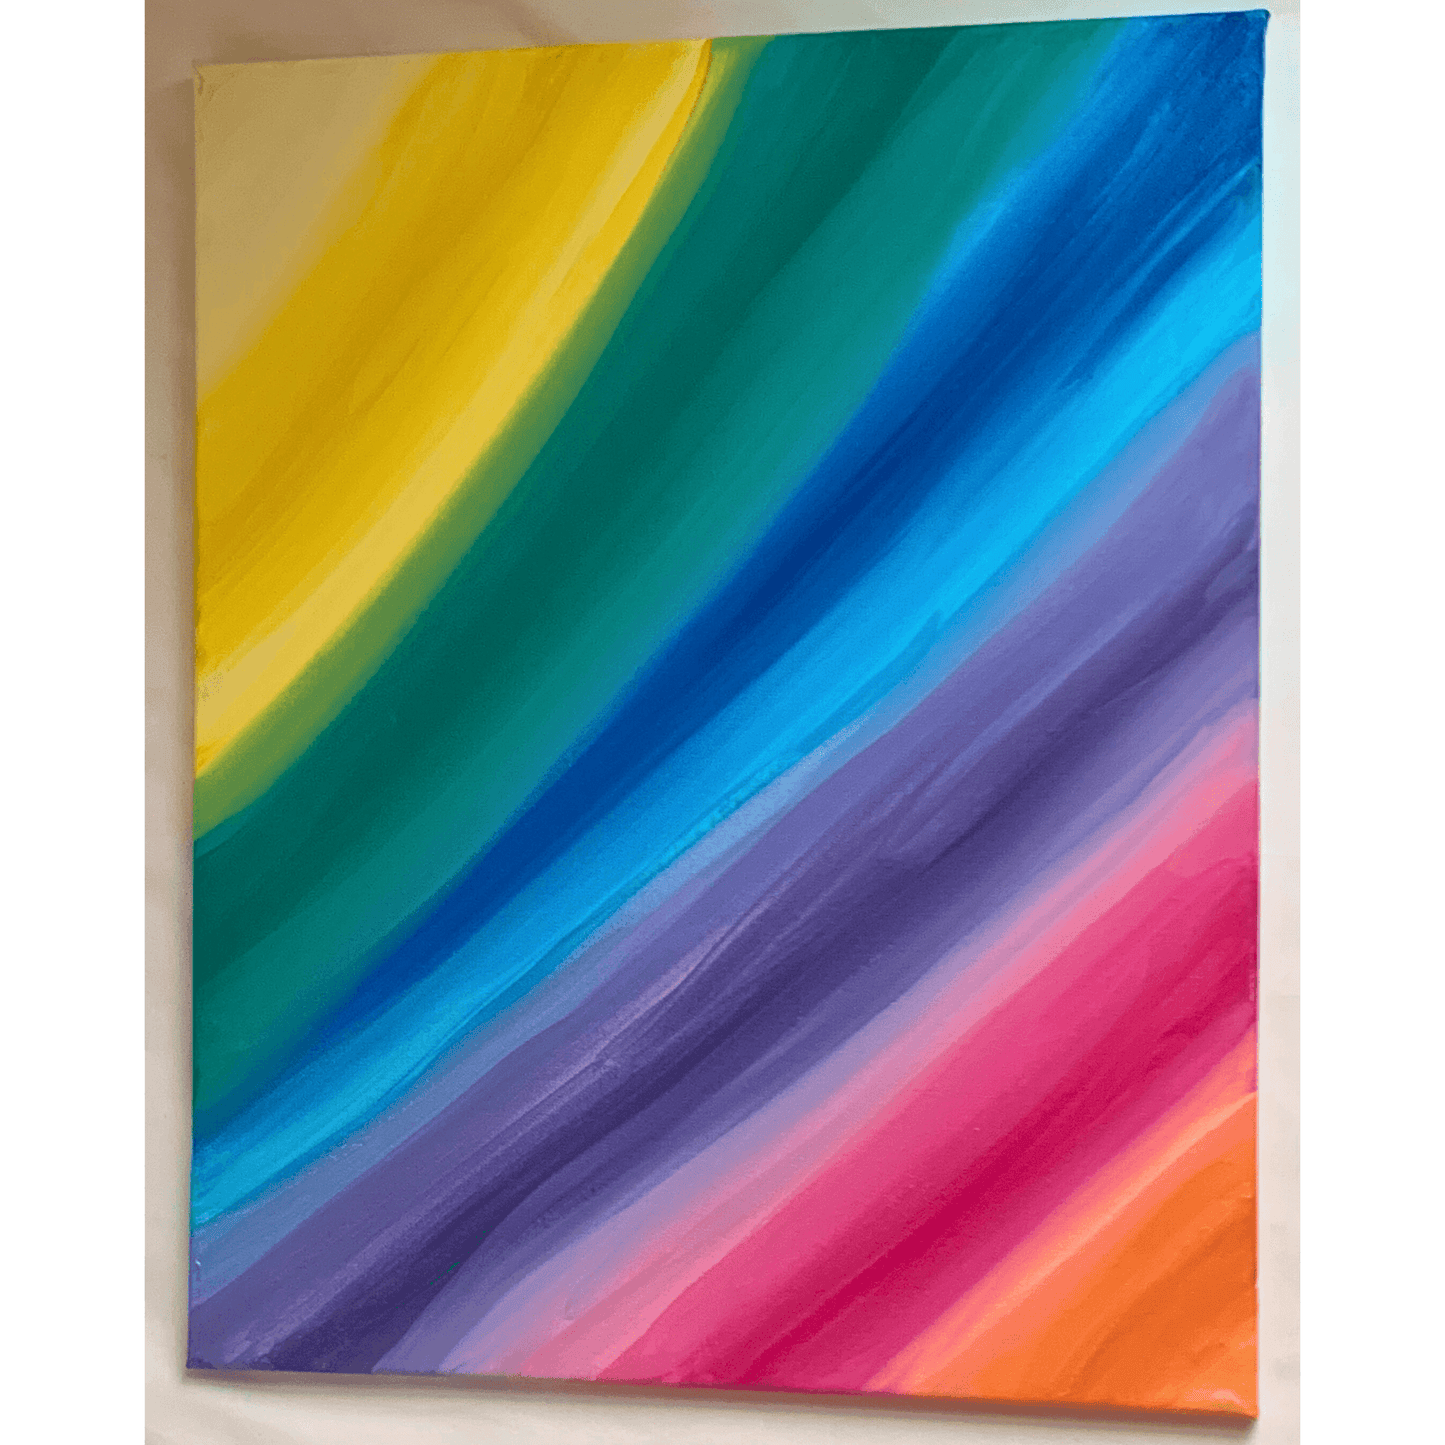 RAINBOW BRIGHT Acrylic Art Abstract 16x20 inch Canvas